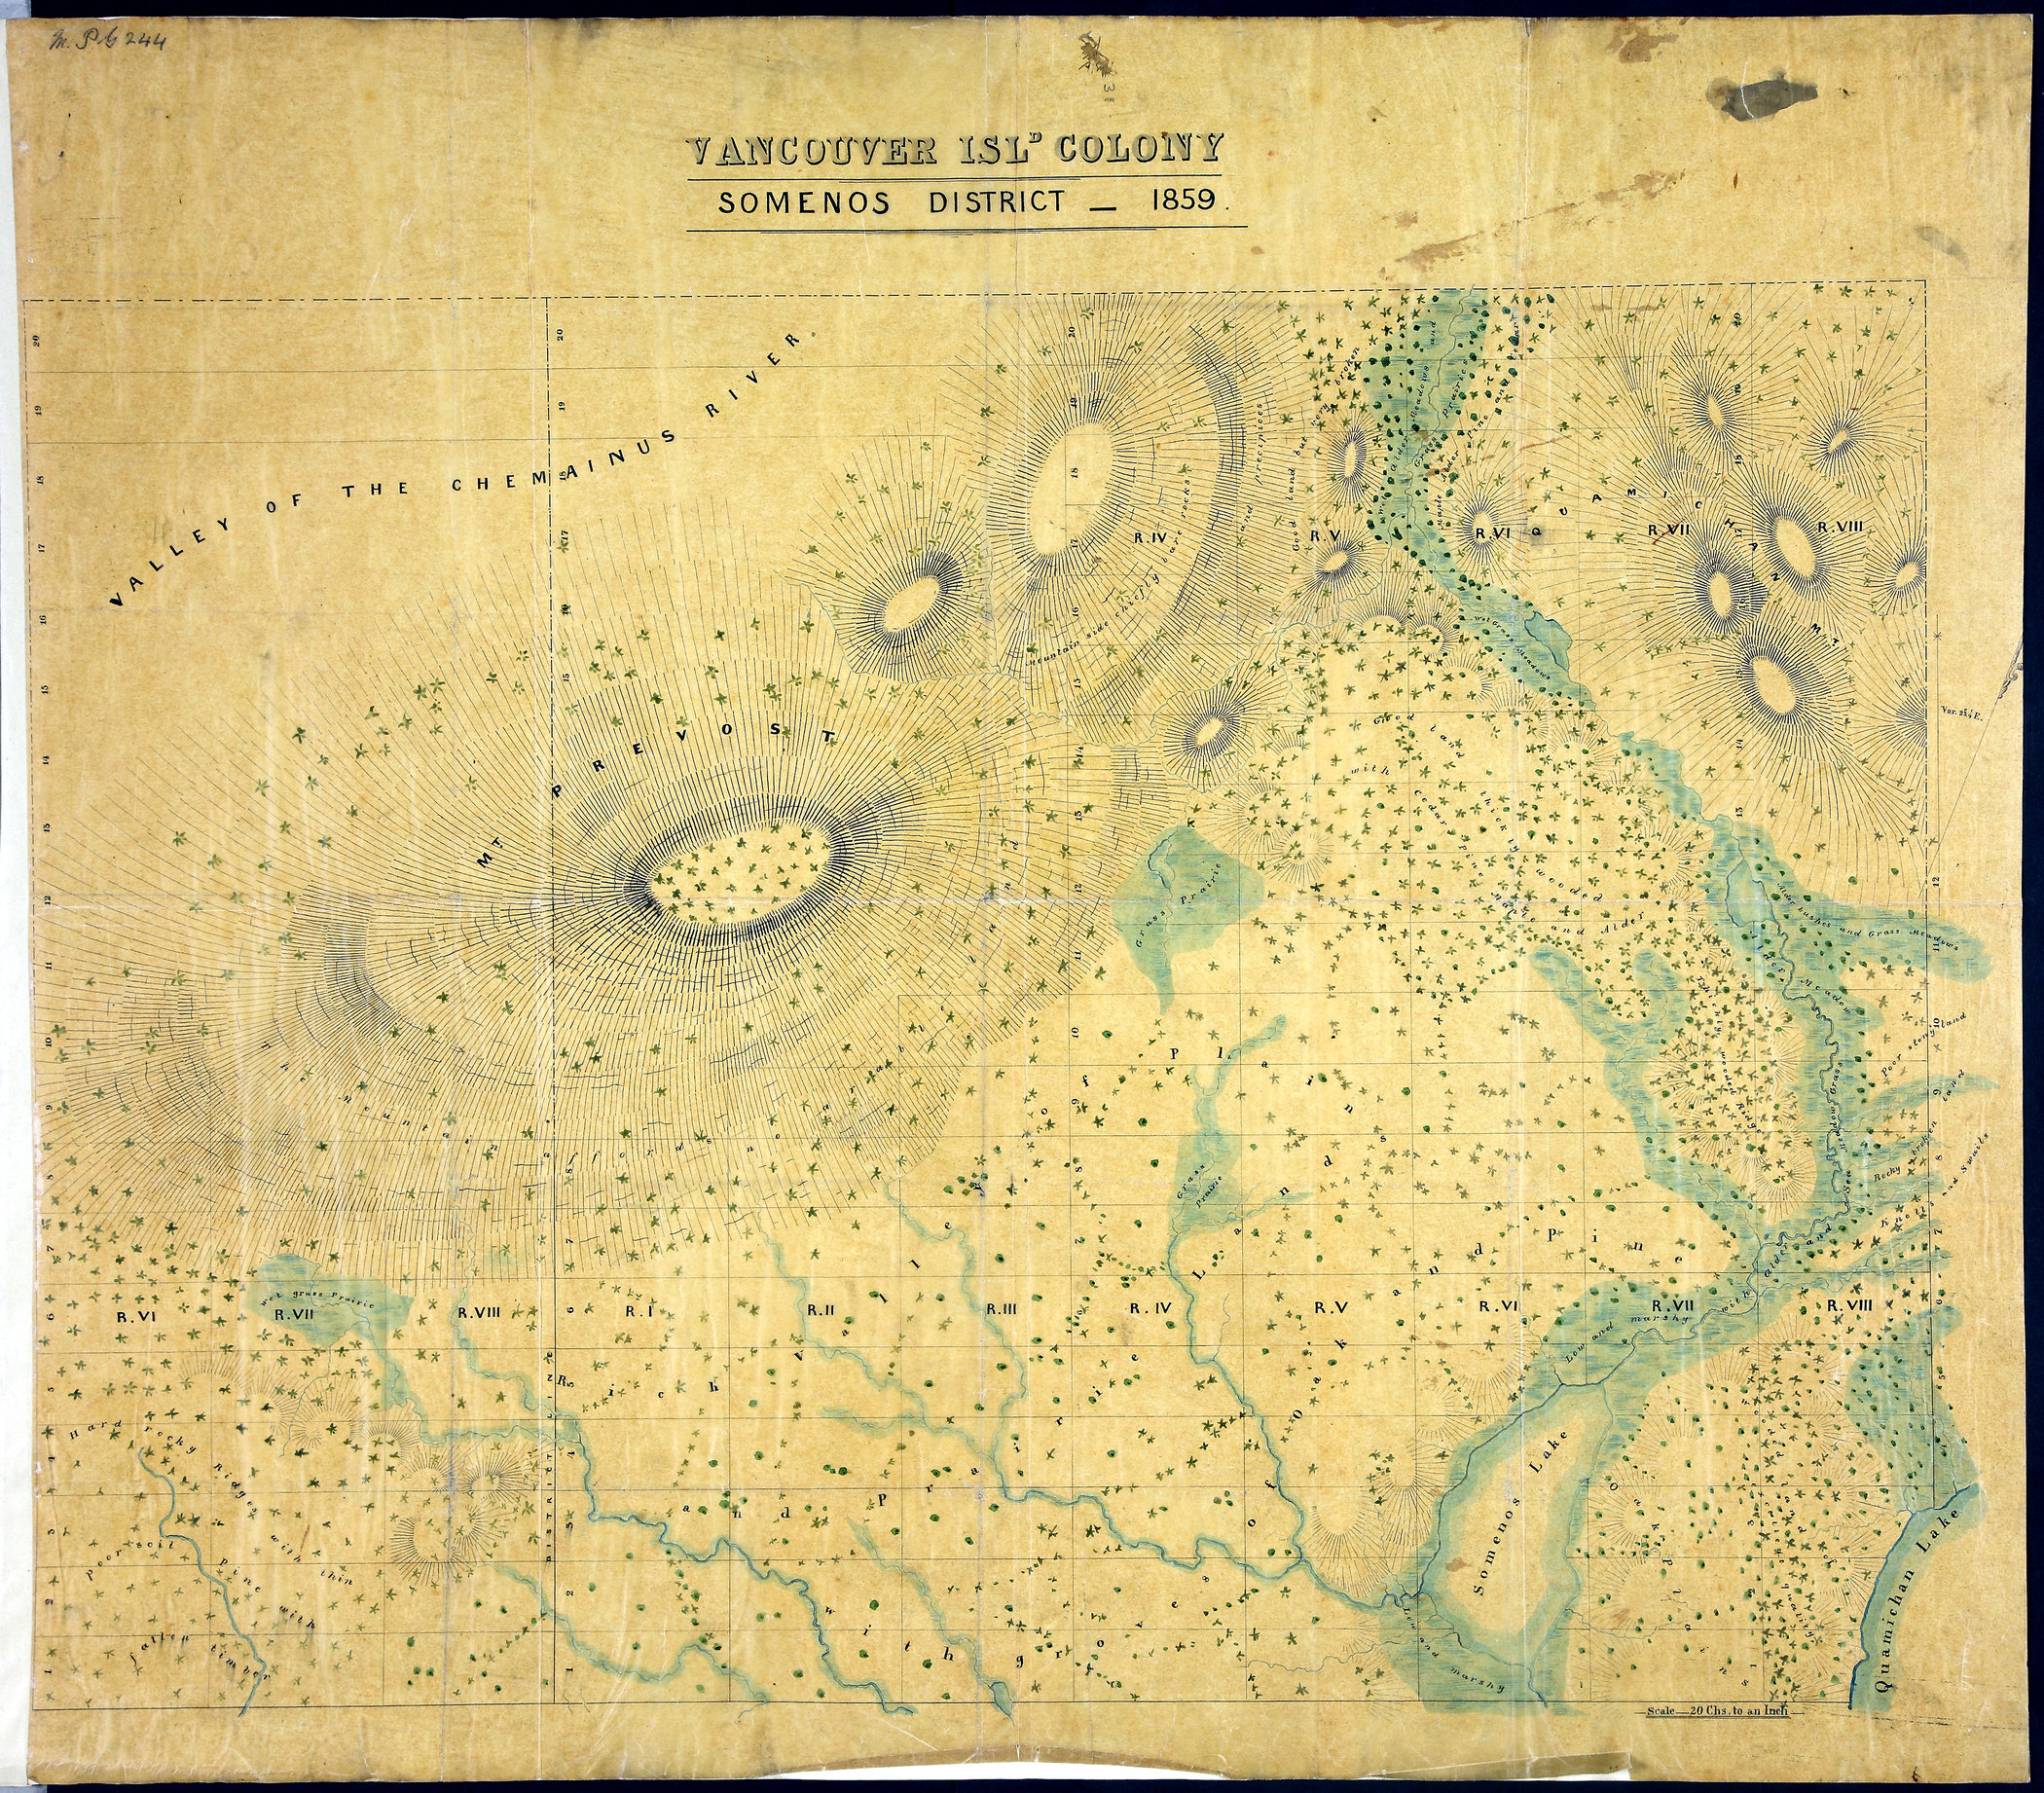 Somenos District, 1859.